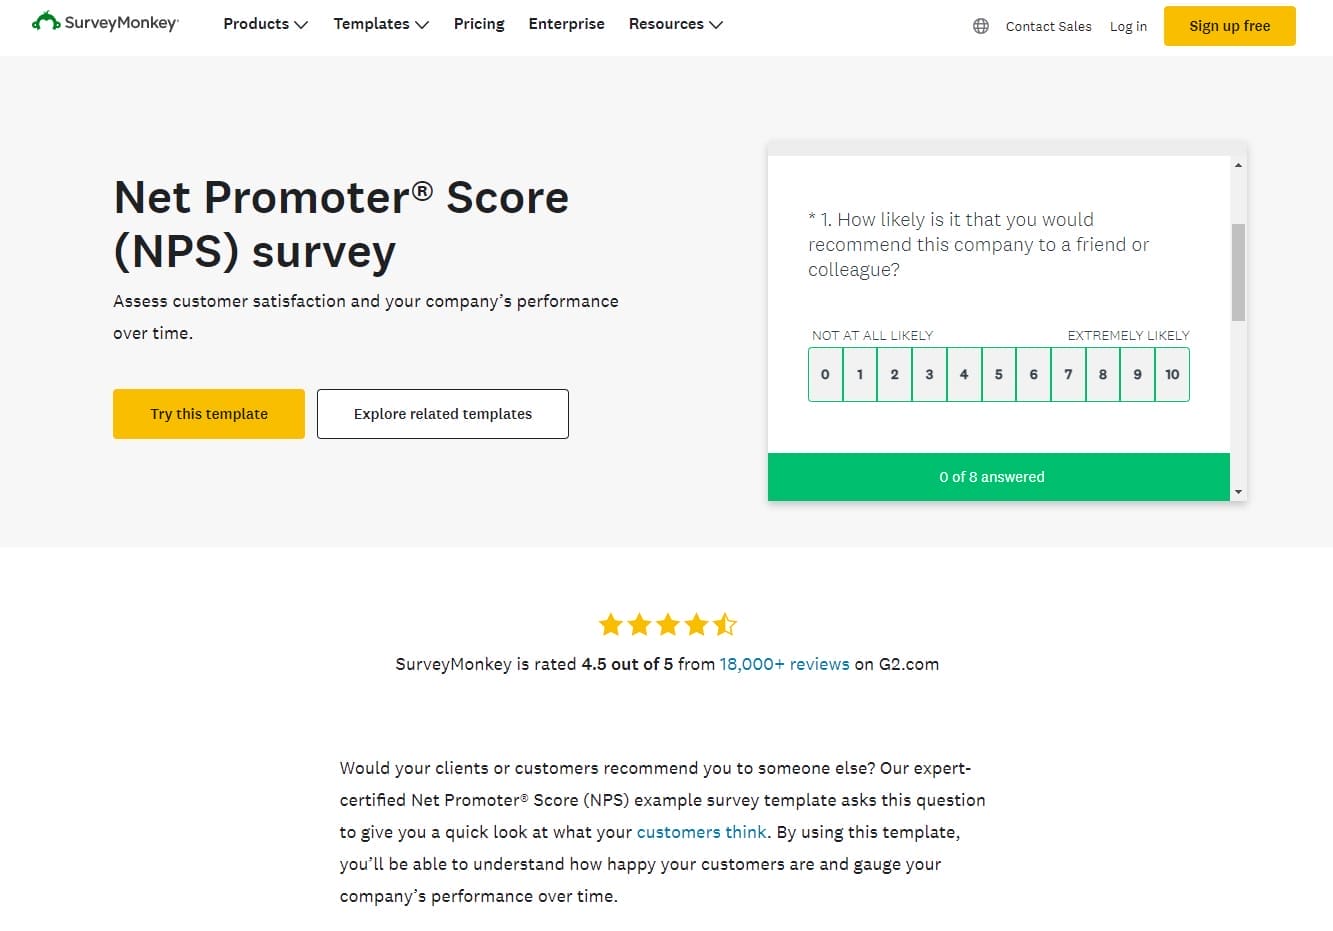 SurveyMoney Net Promoter Score survey to assess customer satisfaction.